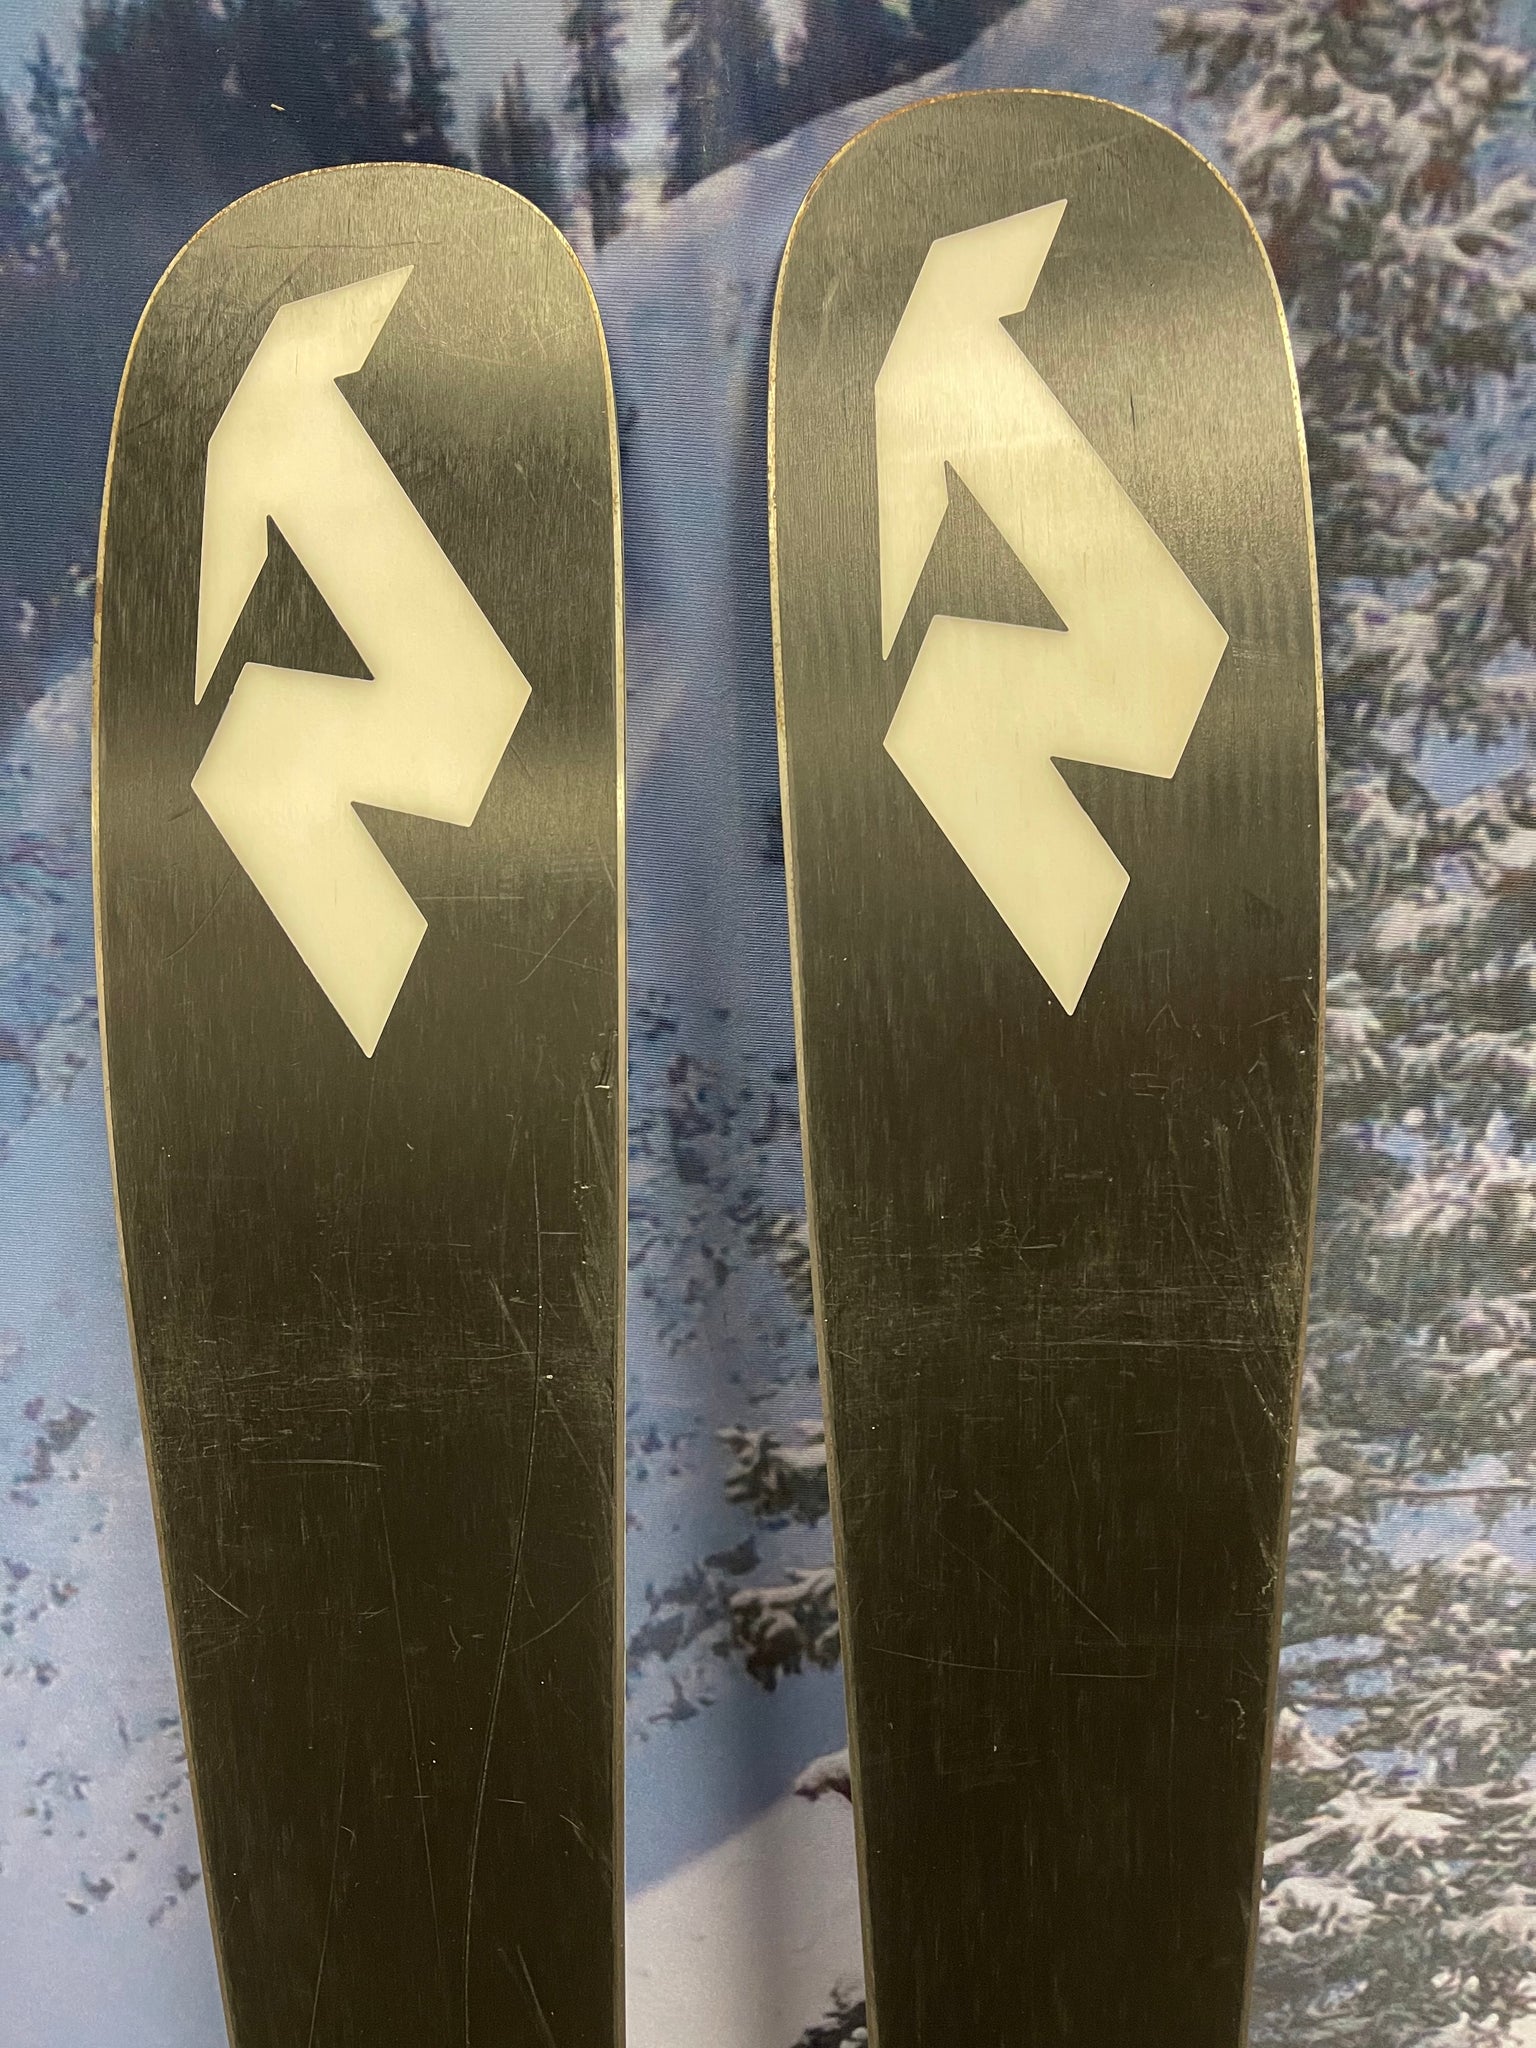 USED Nordica Santa Ana 93 153cm w/ Tyrolia SP 10 Bindings - 2020 Women's Ski